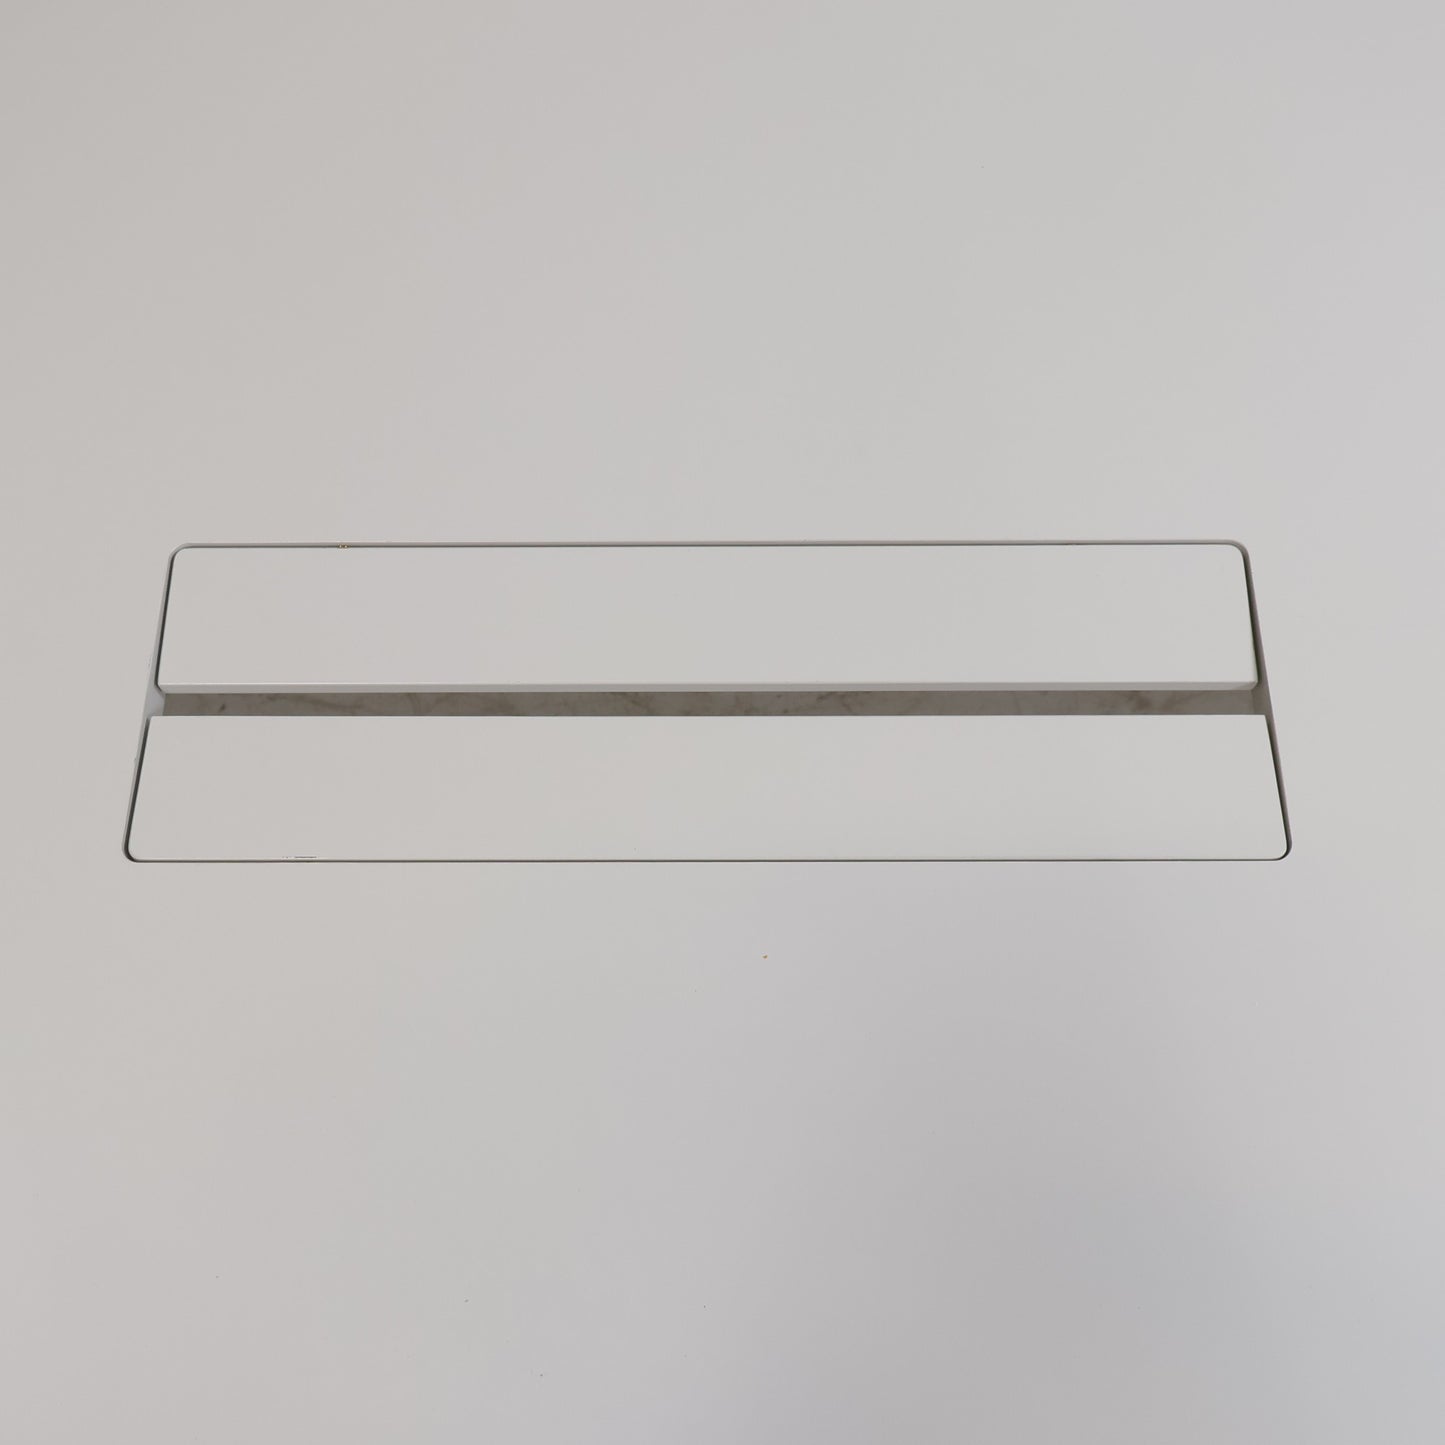 Kvalitetssikret | 300x120 cm, grått møtebord